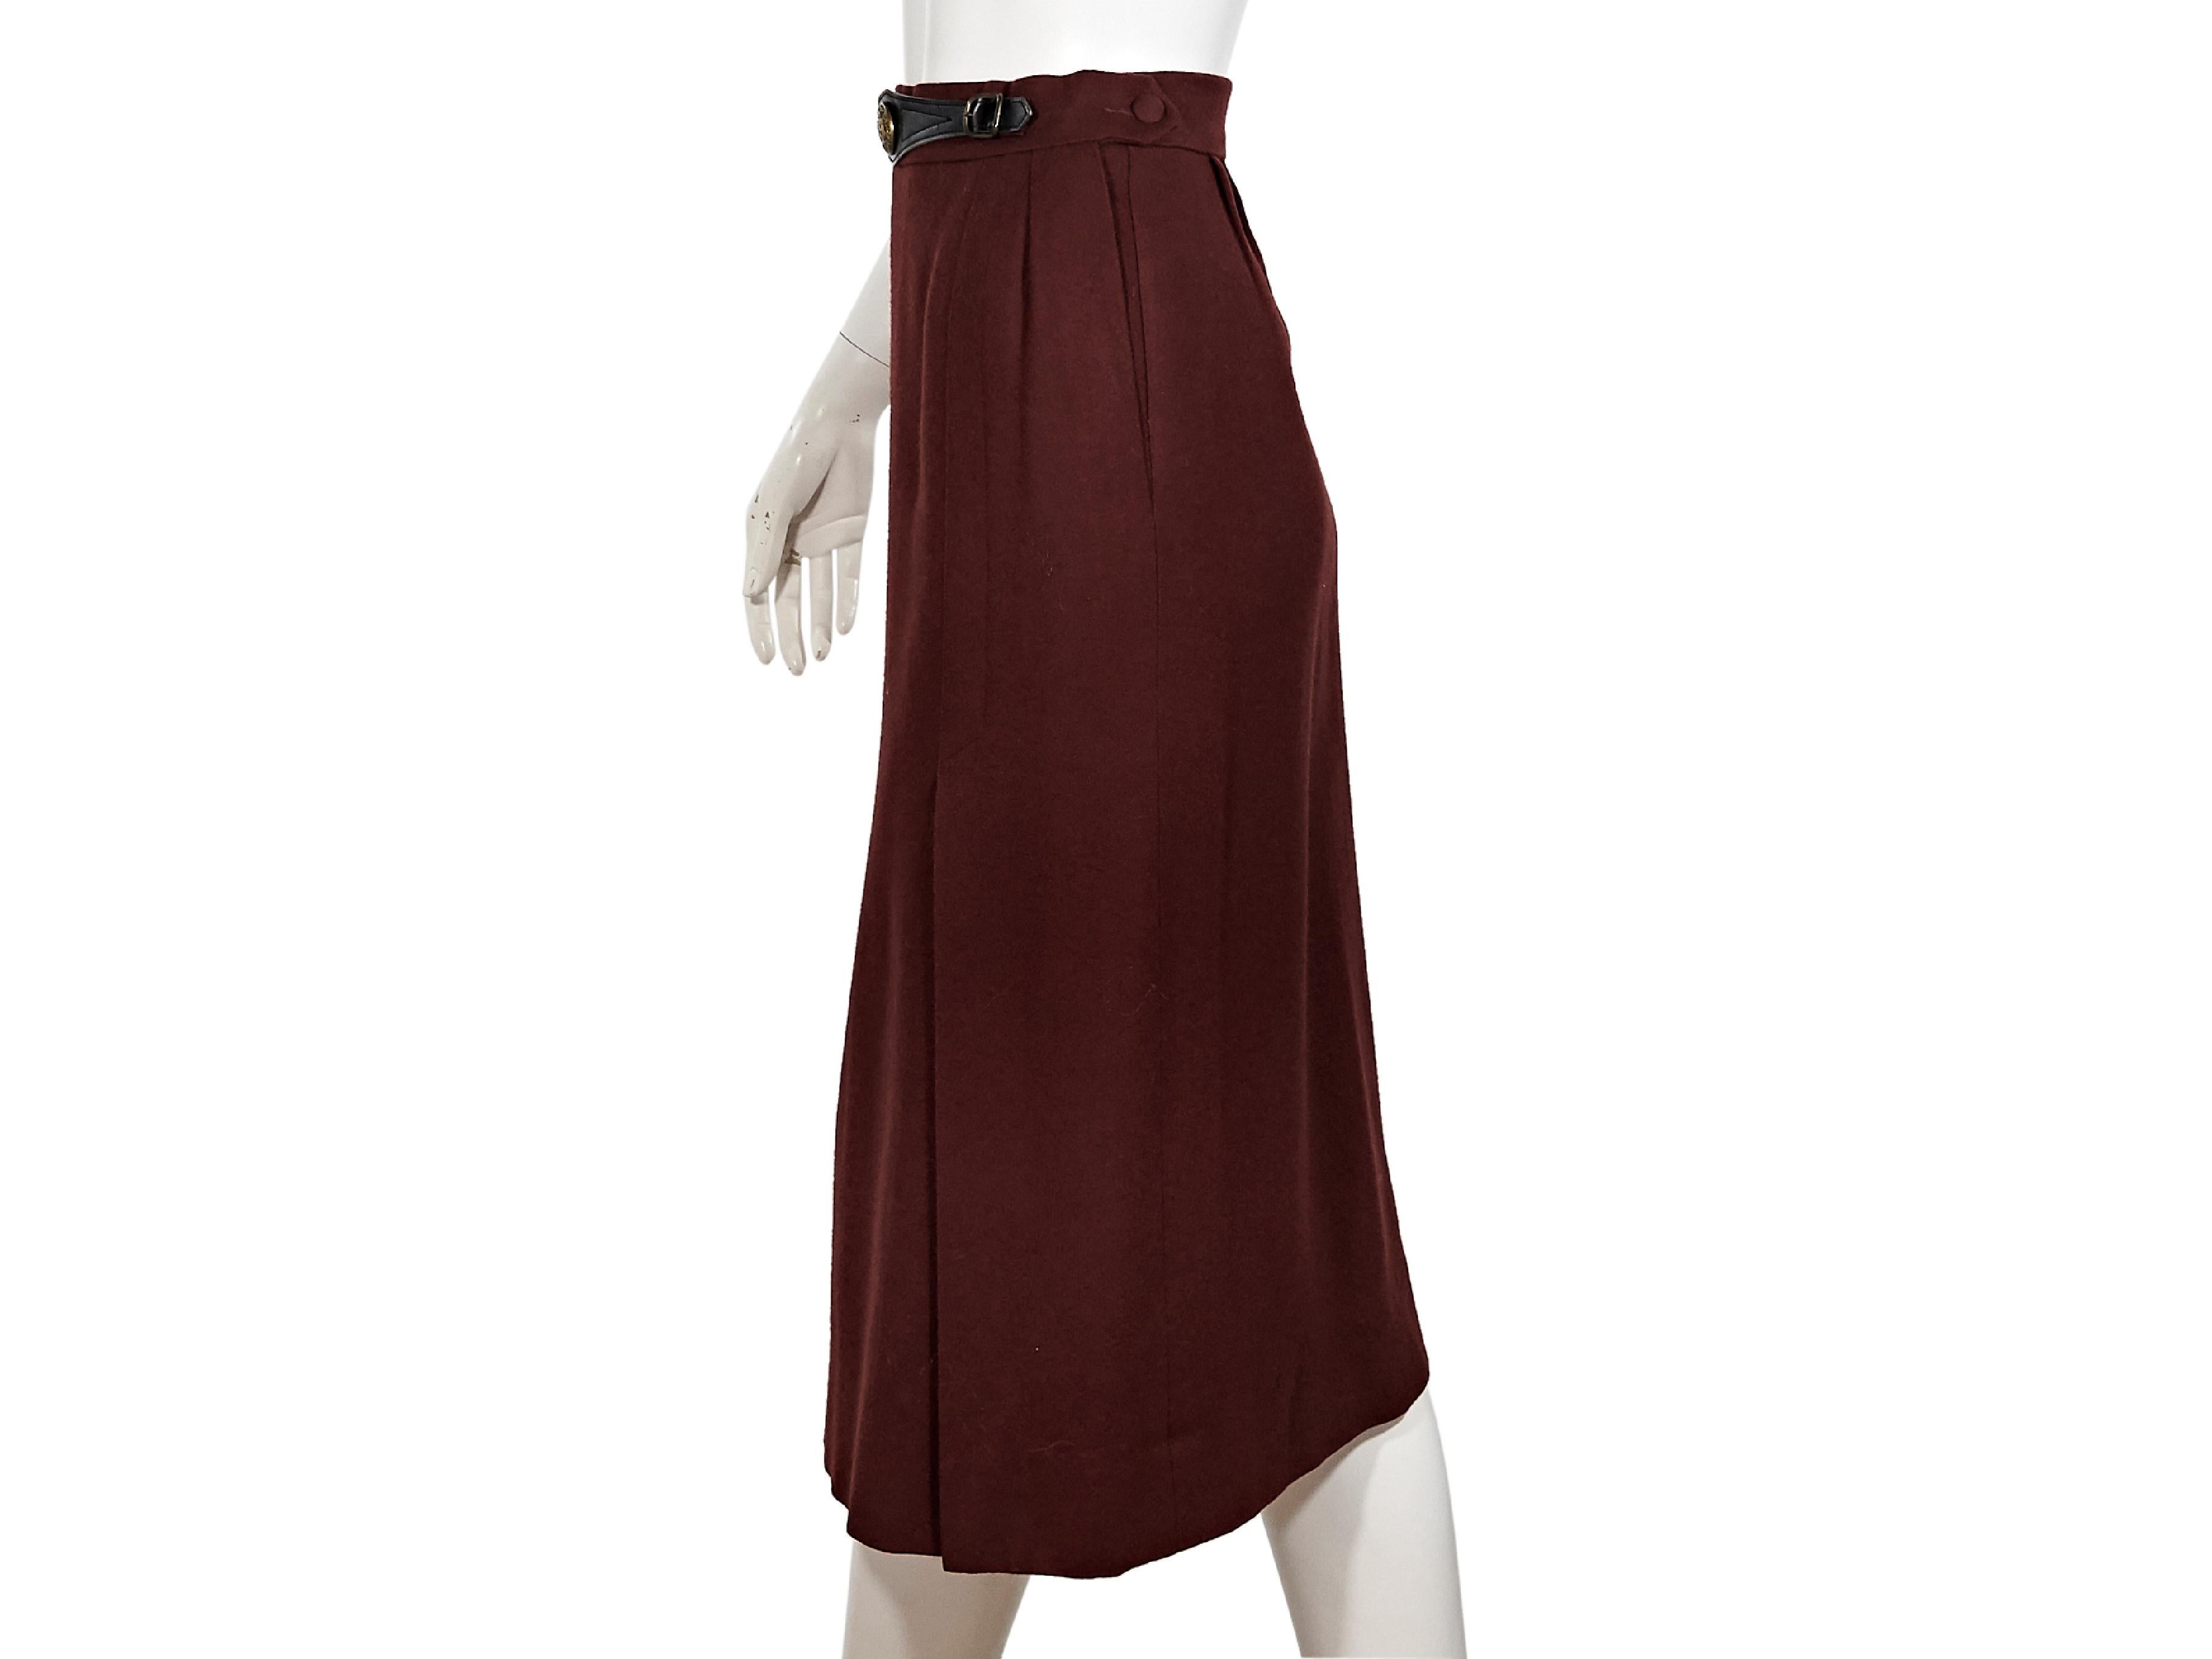 Product details:  Vintage burgundy wool skirt by Hermes.  Banded waist with belt-front accent.  Concealed side zip closure.  Waist button flap pocket.  Front hem vents.  Label size FR 36.  25